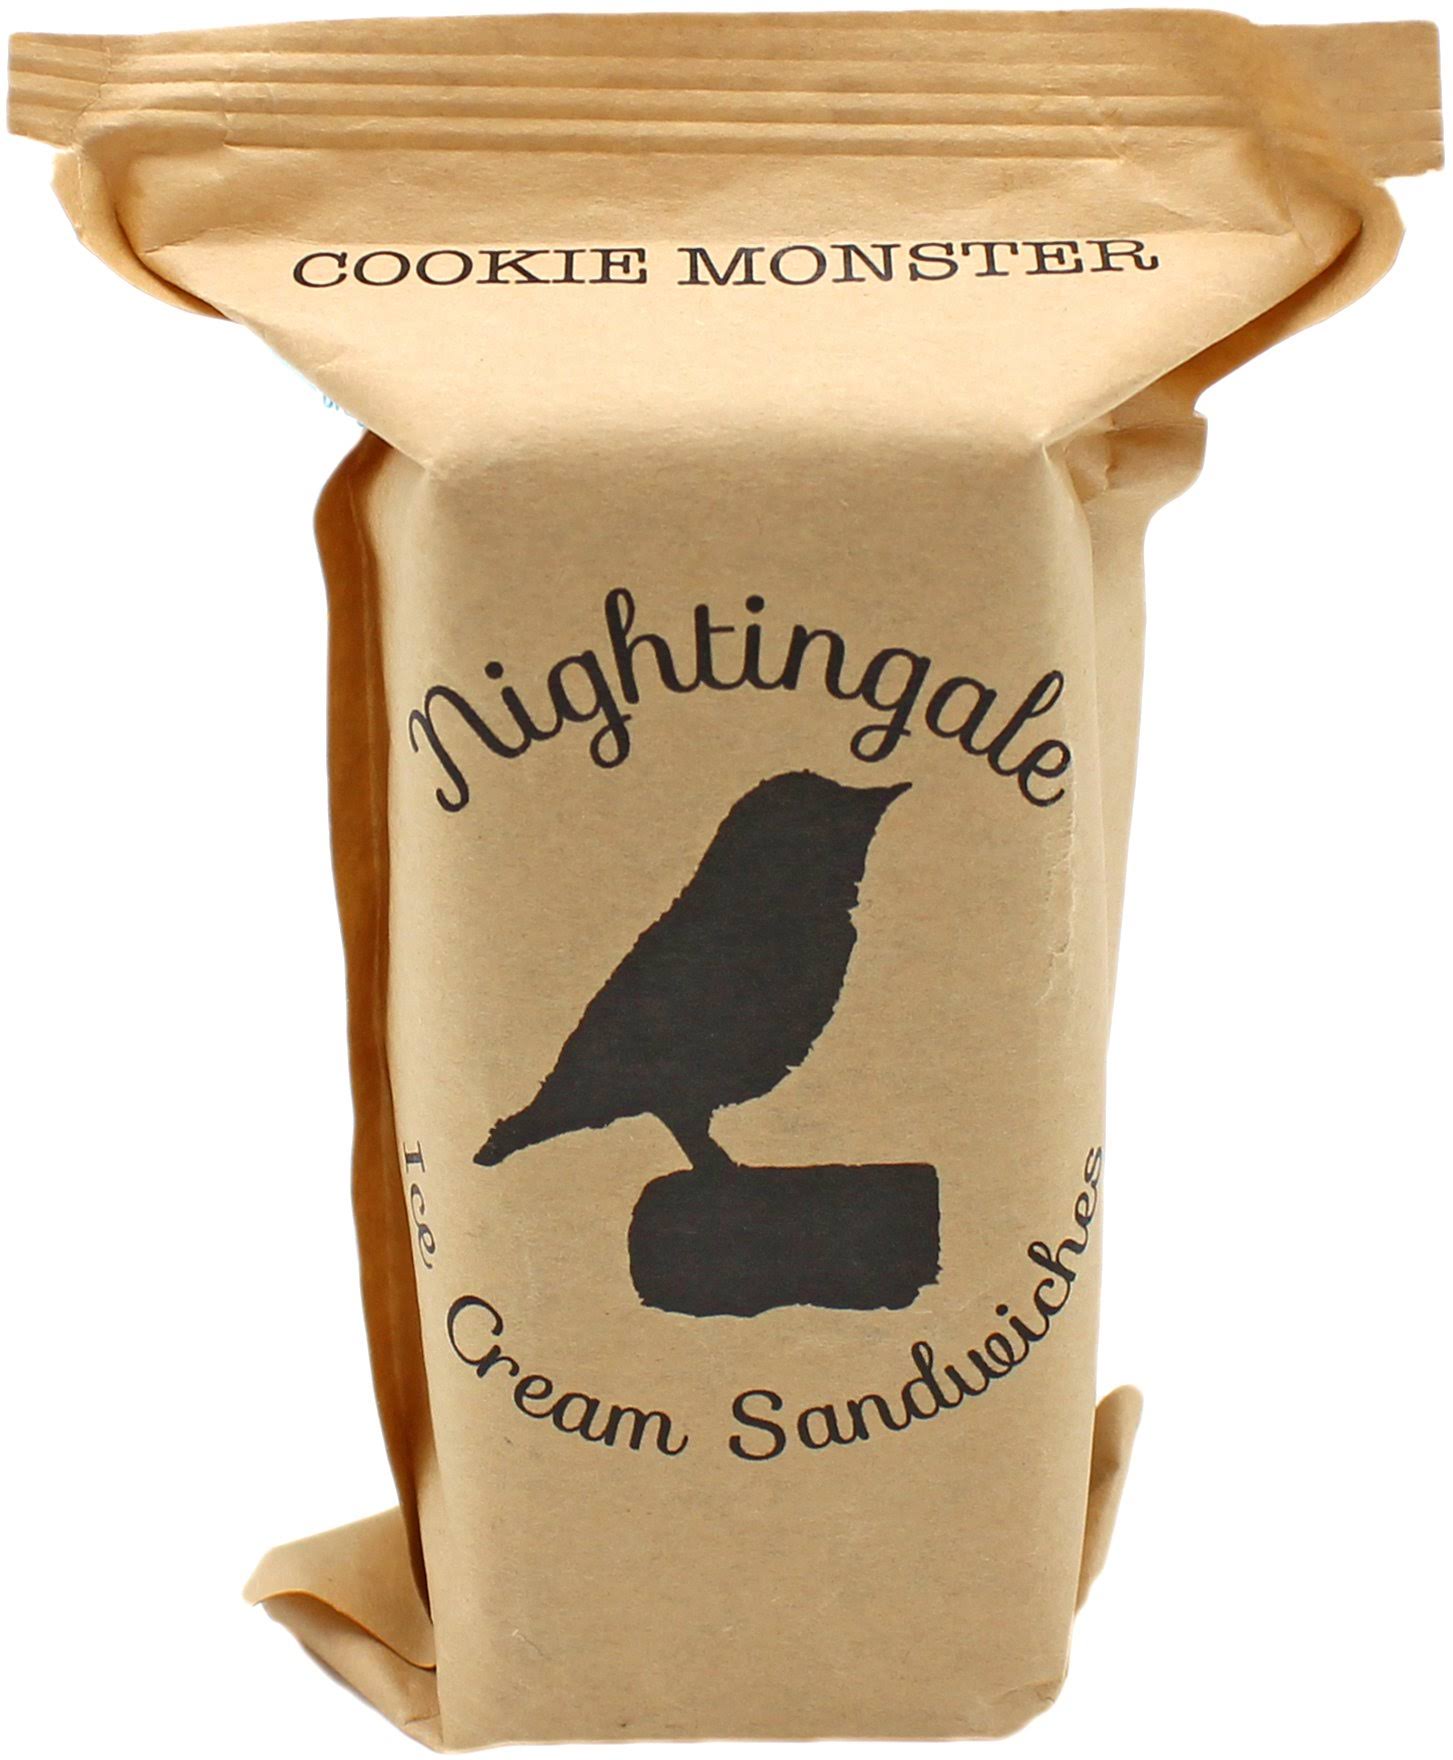 Nightingale Ice Cream Sandwiches, Cookie Monster - 5.3 oz